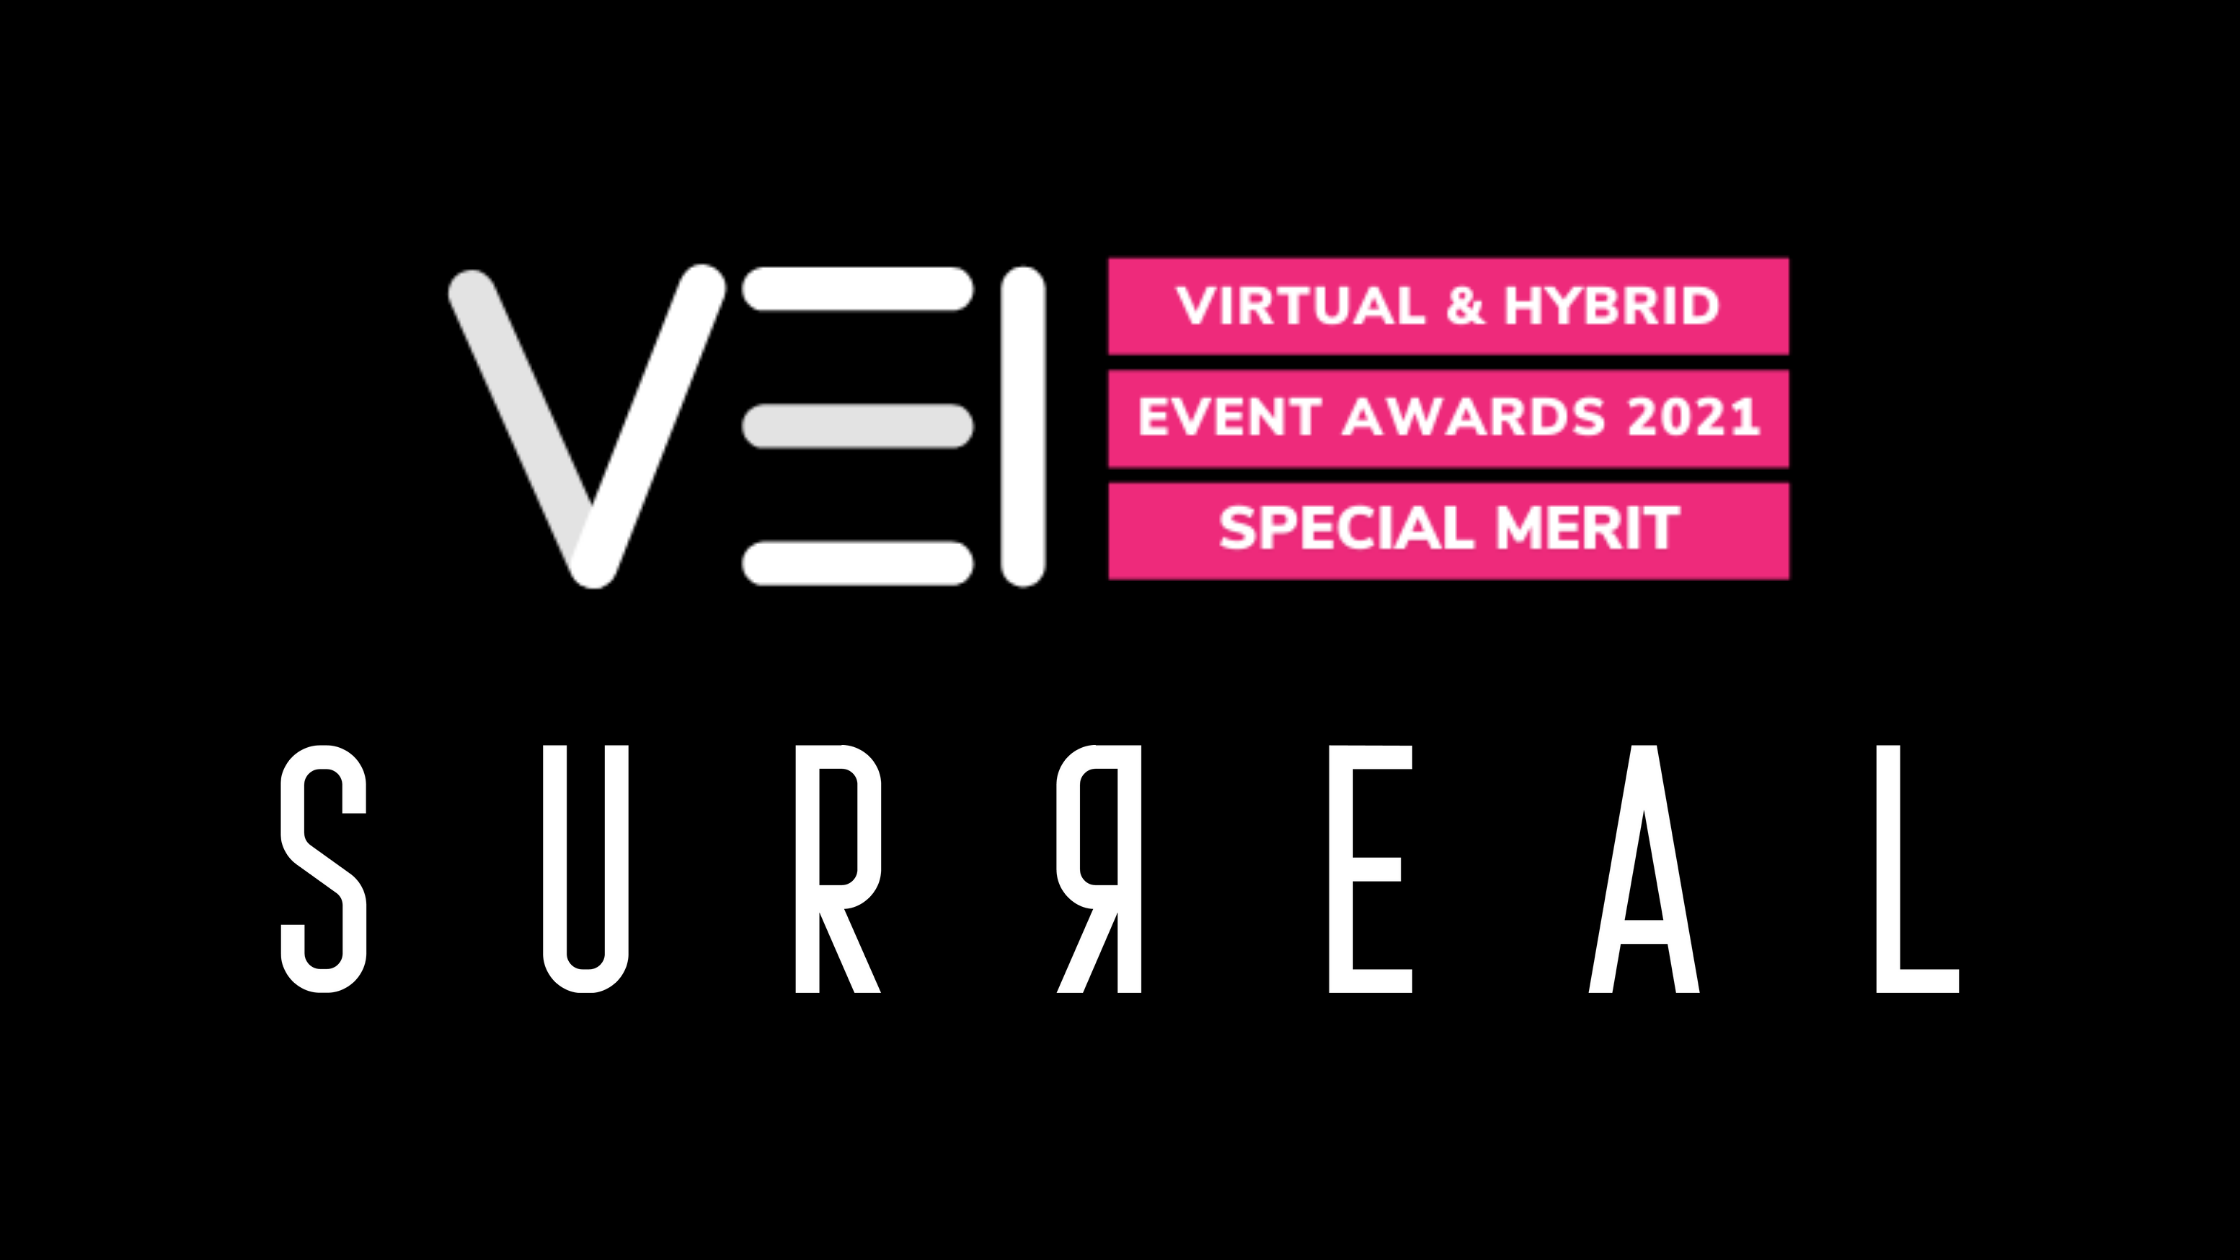 SURREAL Wins Special Merit at VEI Virtual & Hybrid Event Awards